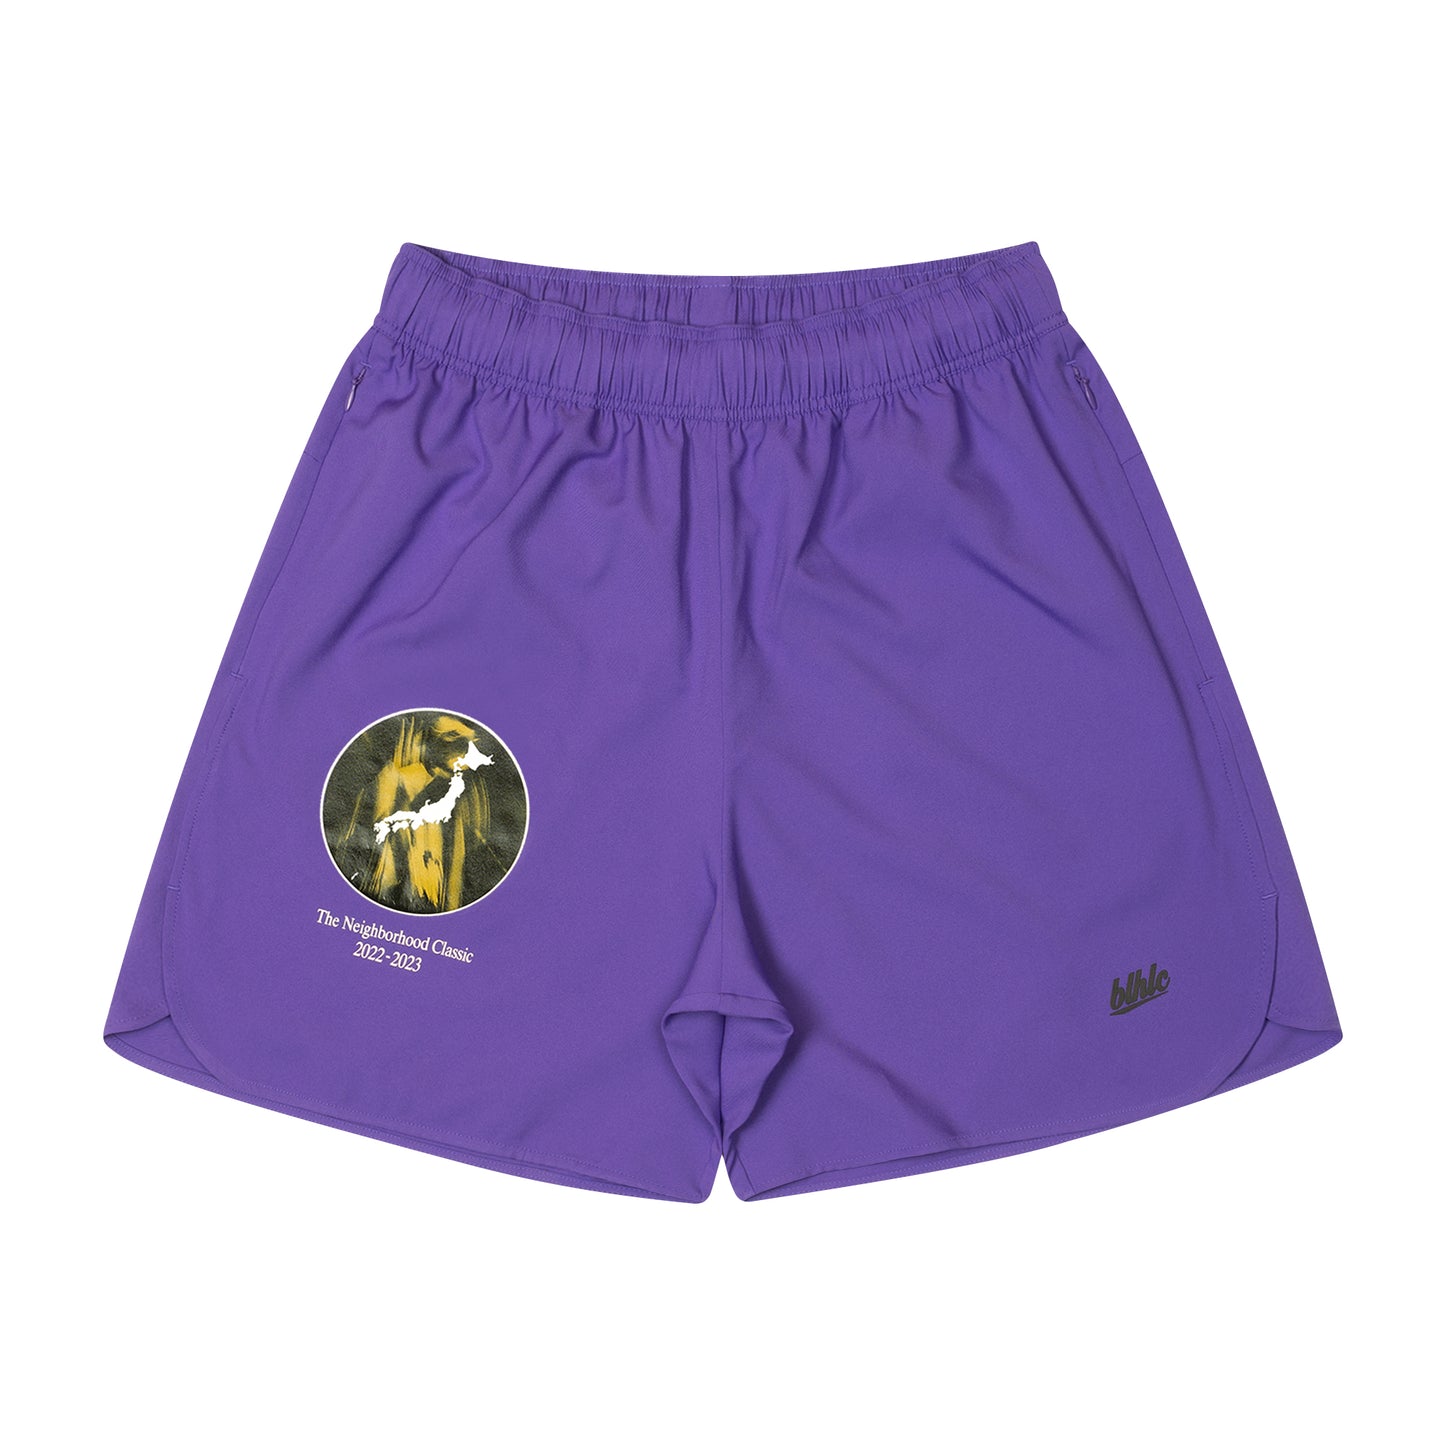 The Final Zip Shorts (purple)